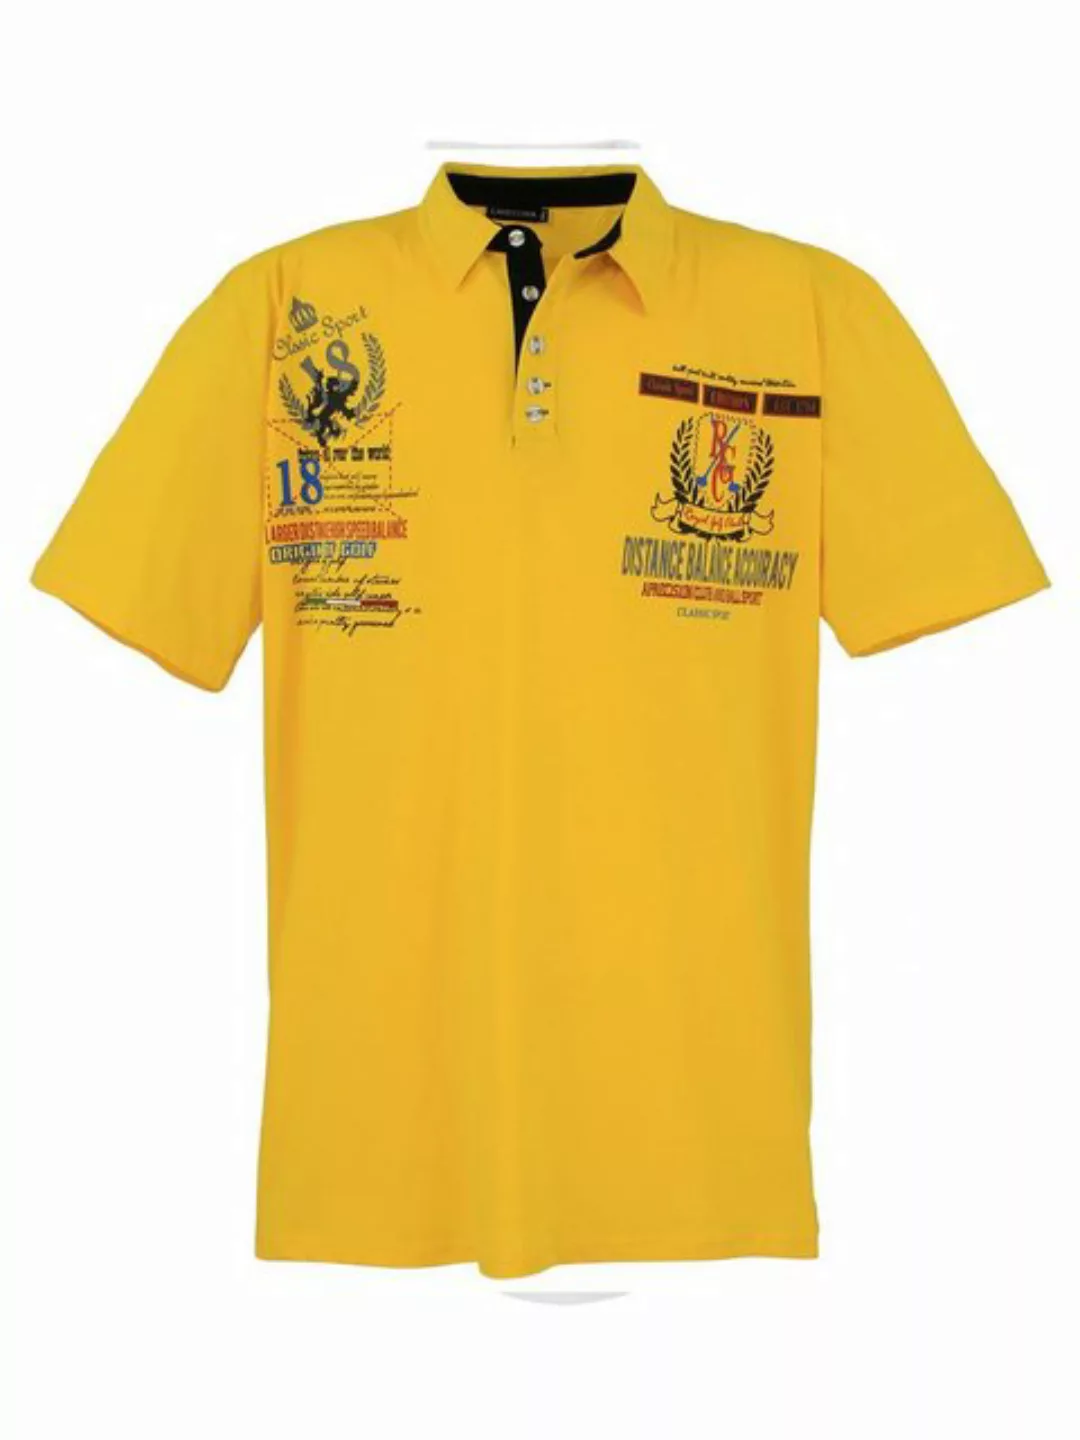 Lavecchia Poloshirt Übergrößen Herren Polo Shirt LV-2038 Herren Polo Shirt günstig online kaufen